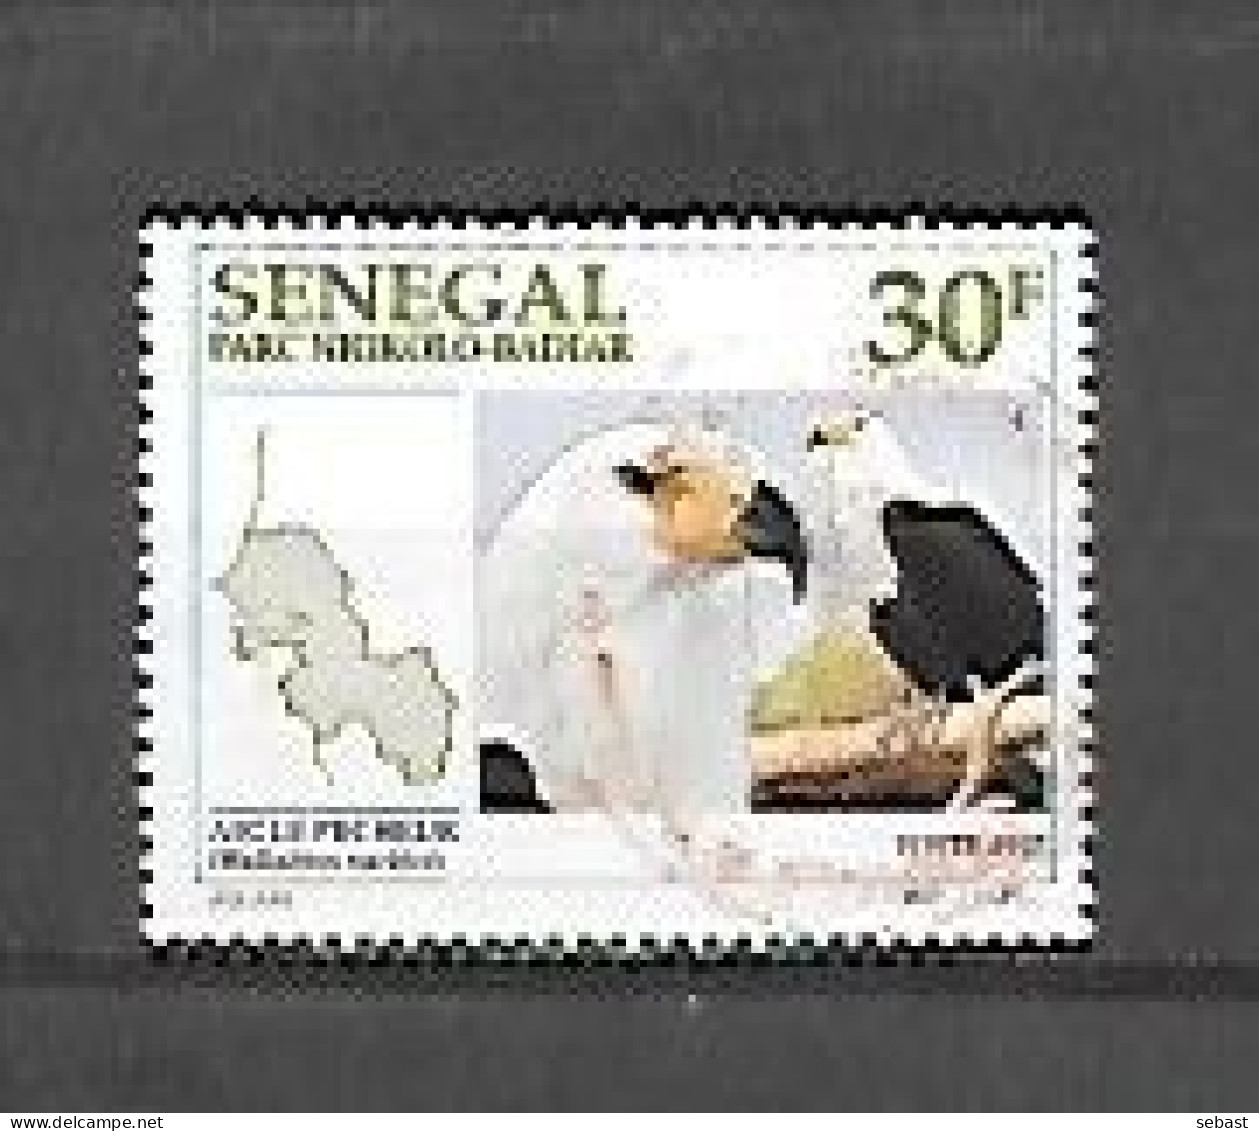 TIMBRE OBLITERE DU SENEGAL DE 1997 N° MICHEL 1485 - Senegal (1960-...)